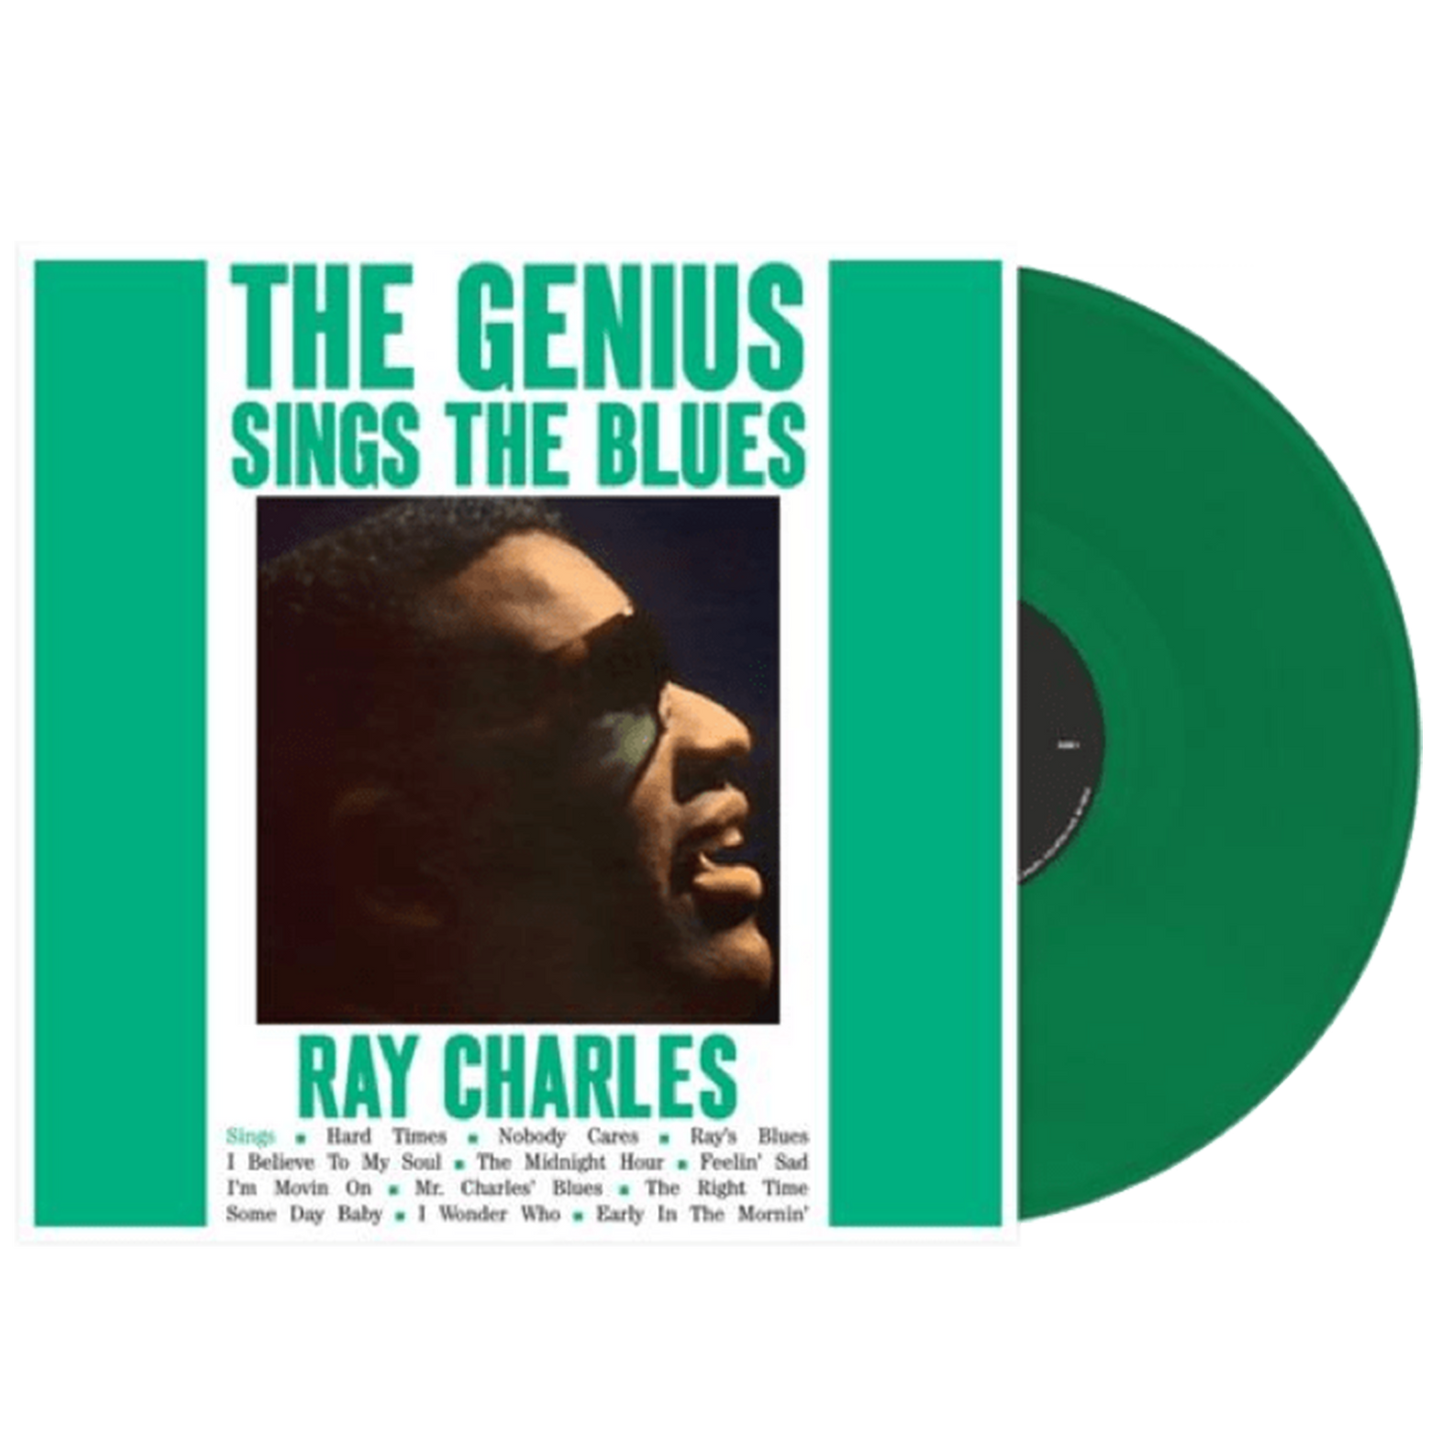 Ray Charles - Genius Sings The Blues [Green Colored Vinyl]